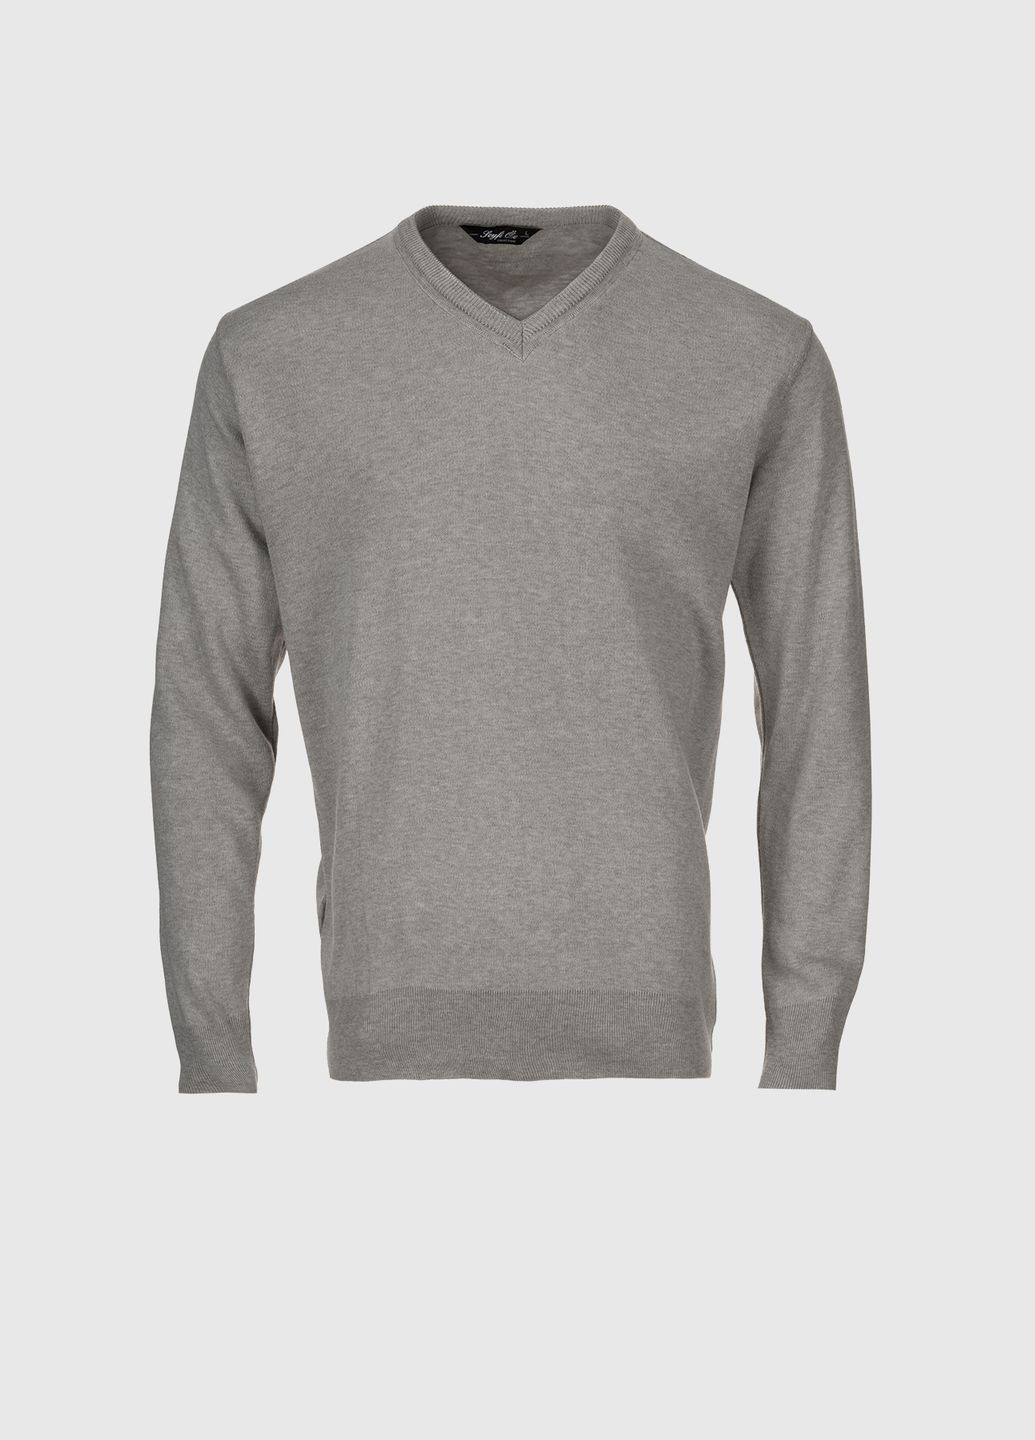 Светло-серый демисезонный пуловер пуловер Akin Trico